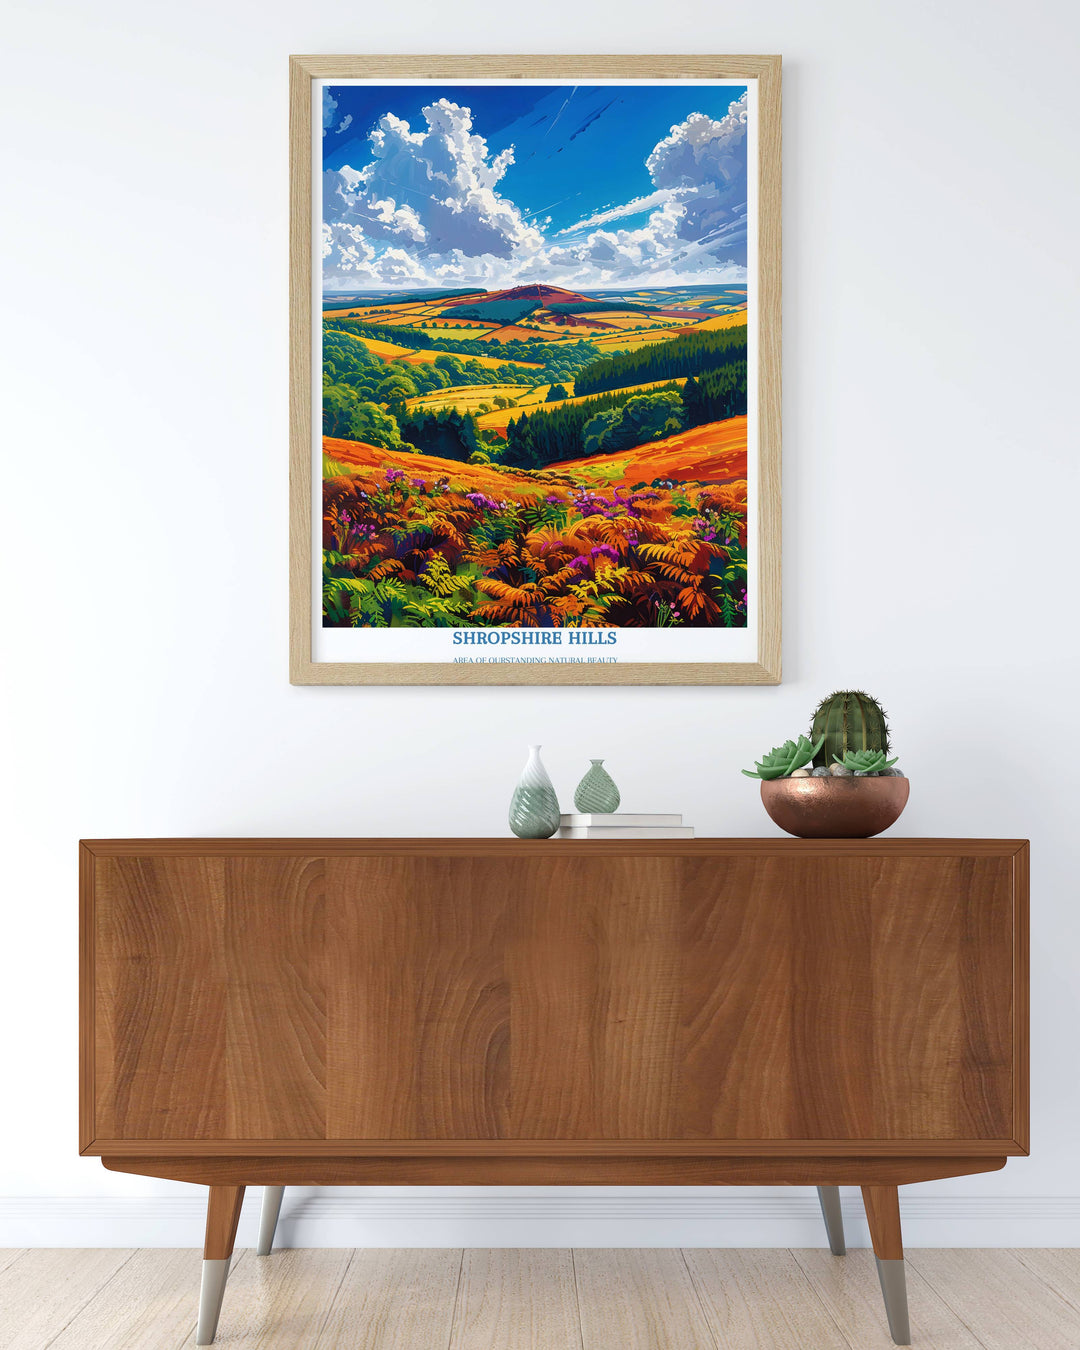 Shropshire Hills Travel Print Wall Art - The Long Mynd - Shropshire Hills Gift Art